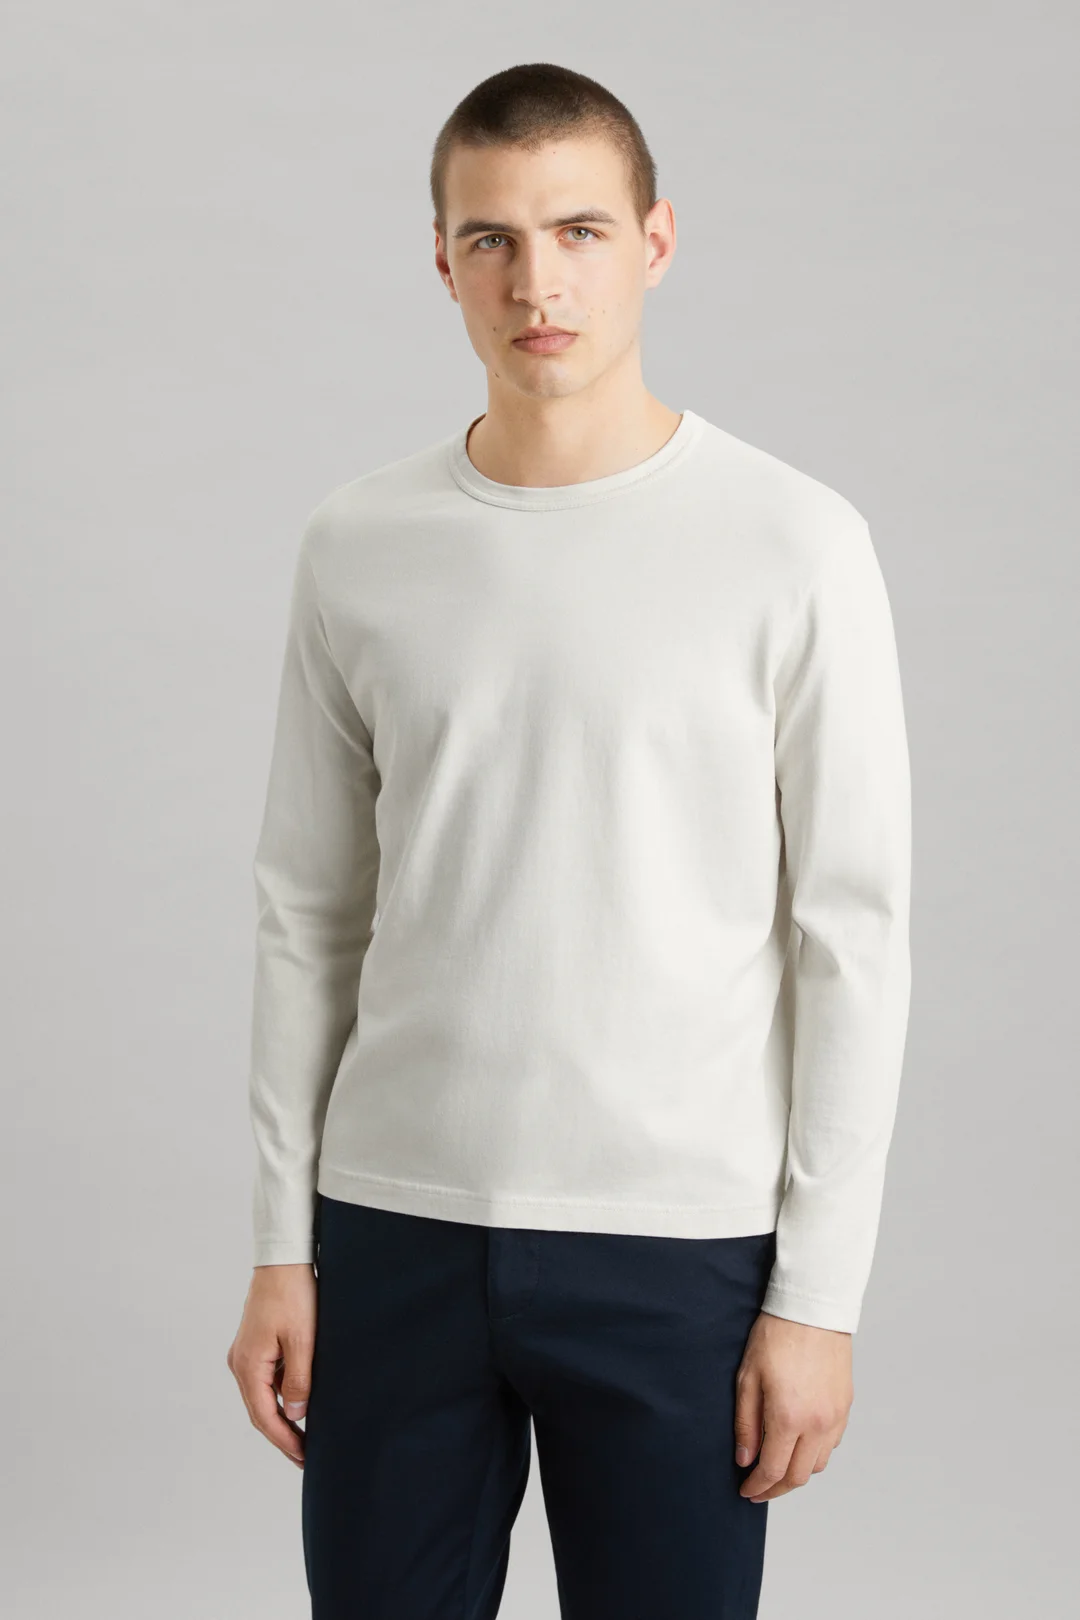 Off White Long Sleeve T-Shirt | Organic Cotton Crewneck - ASKET